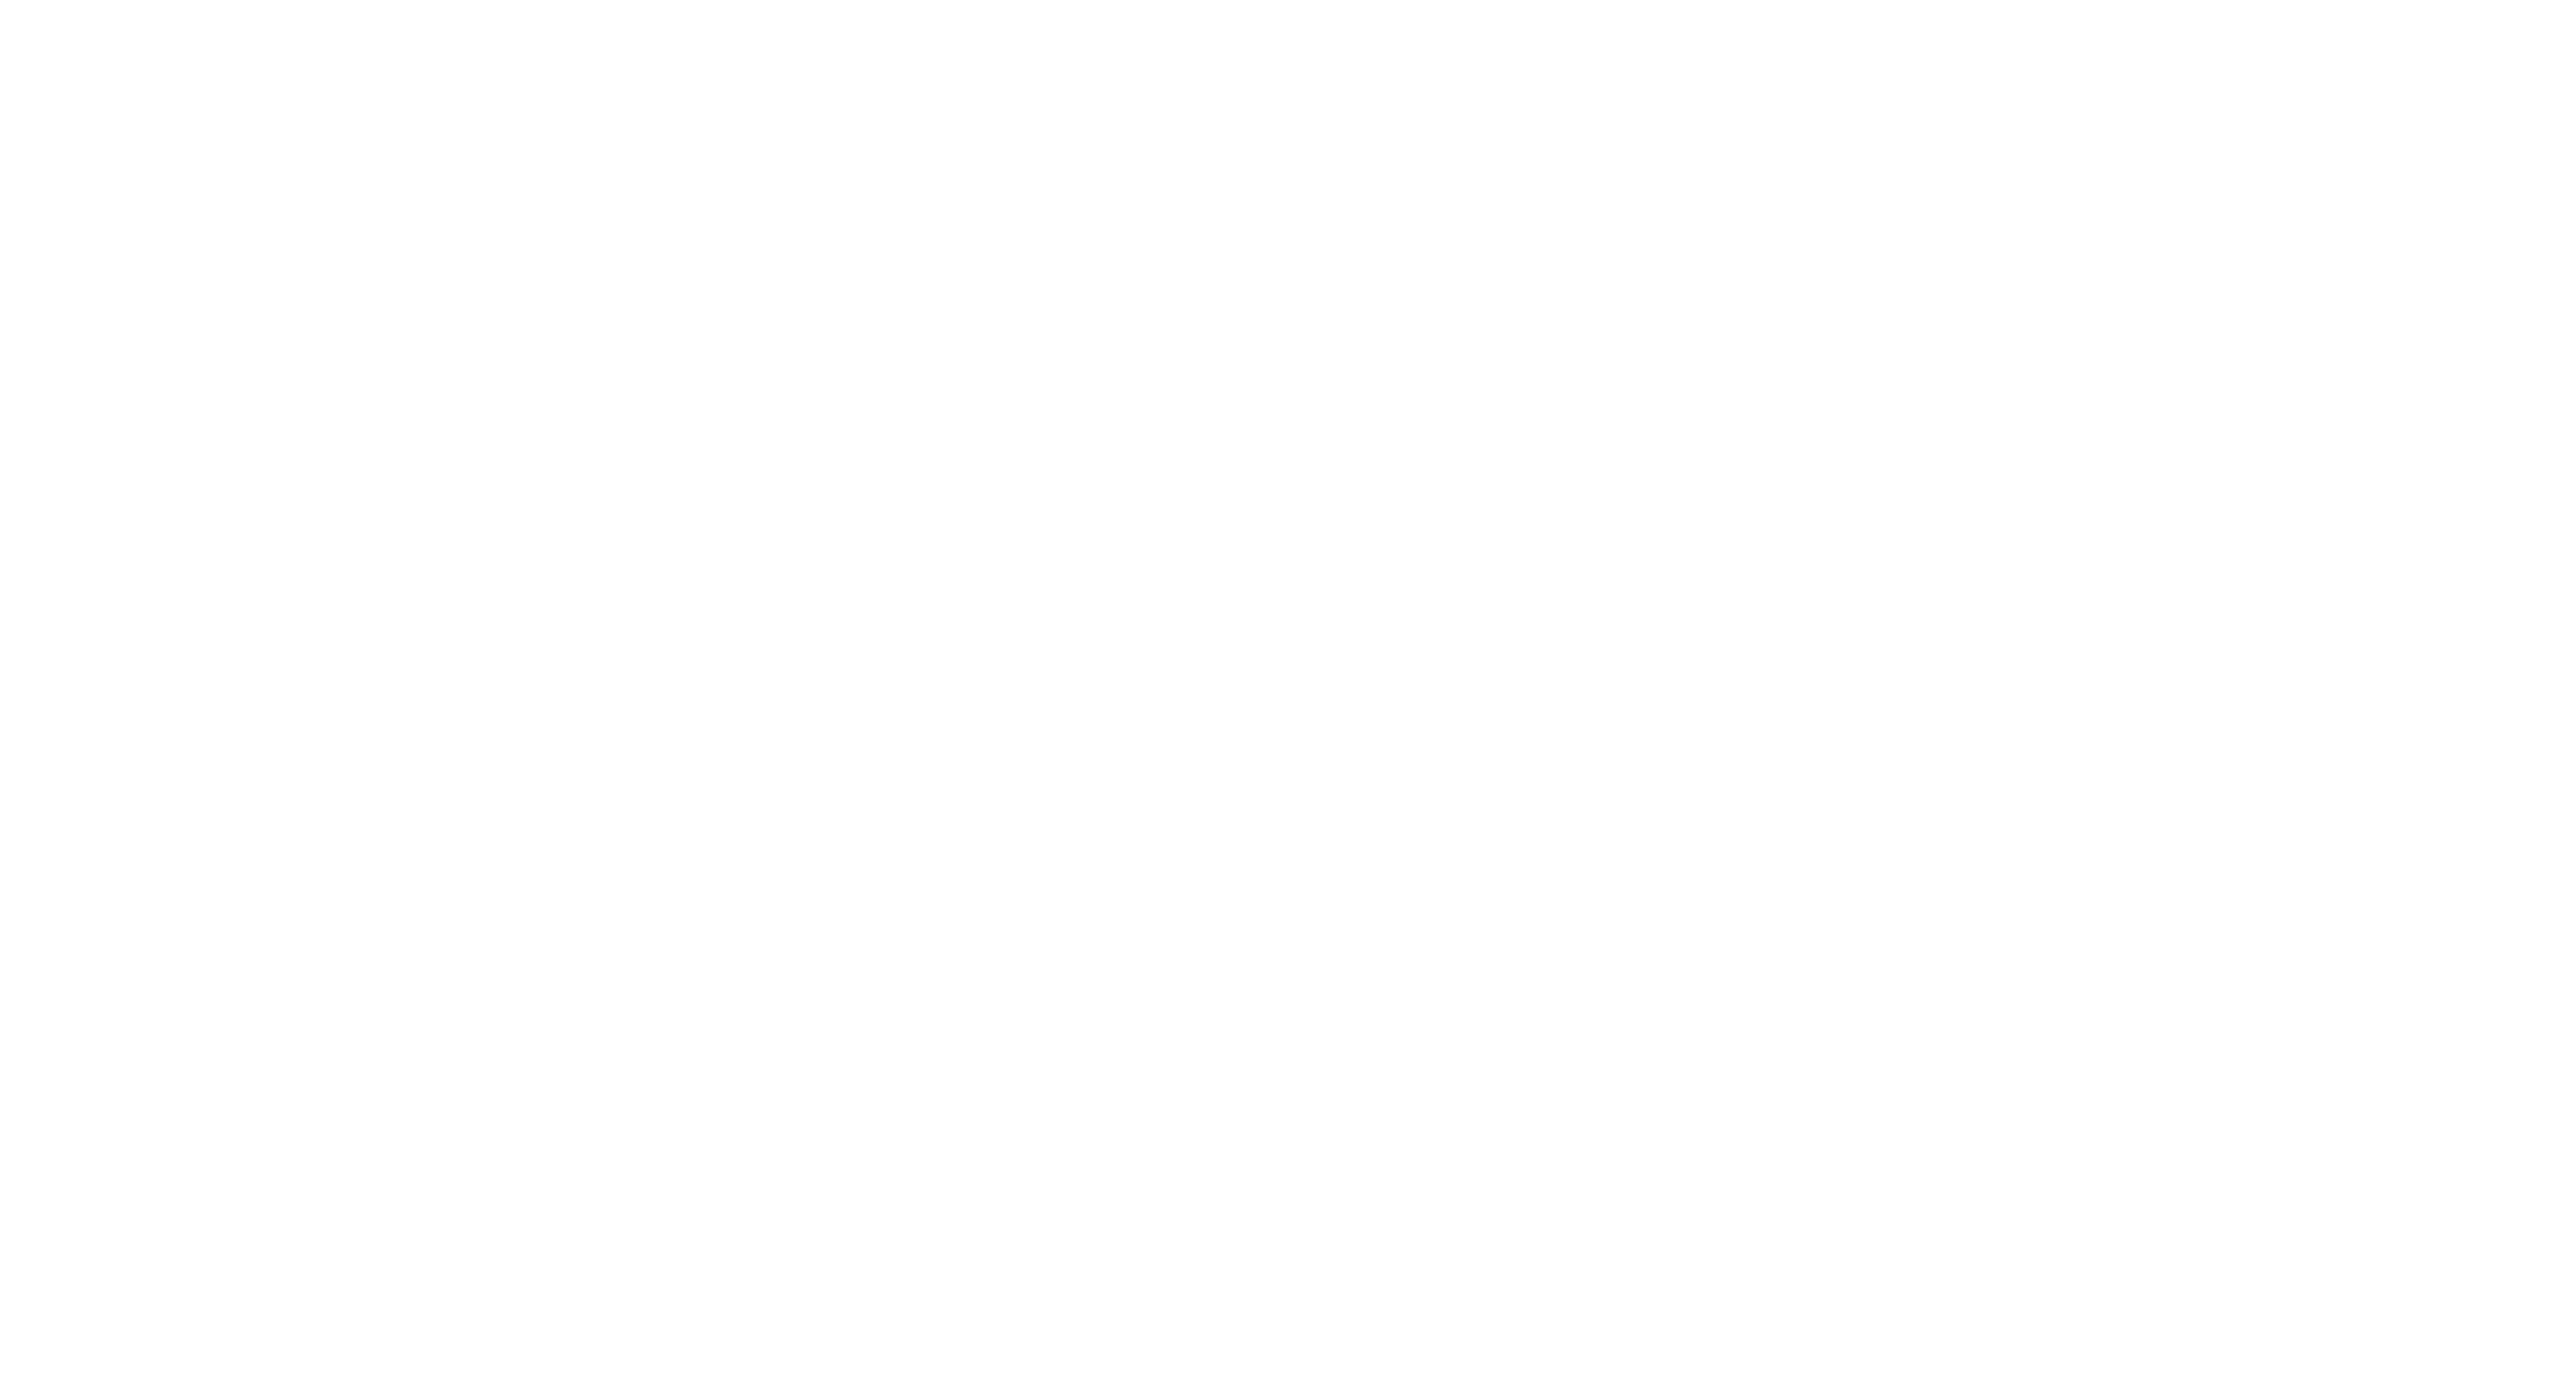 Exhibitor Hamilton Games Festival 2019